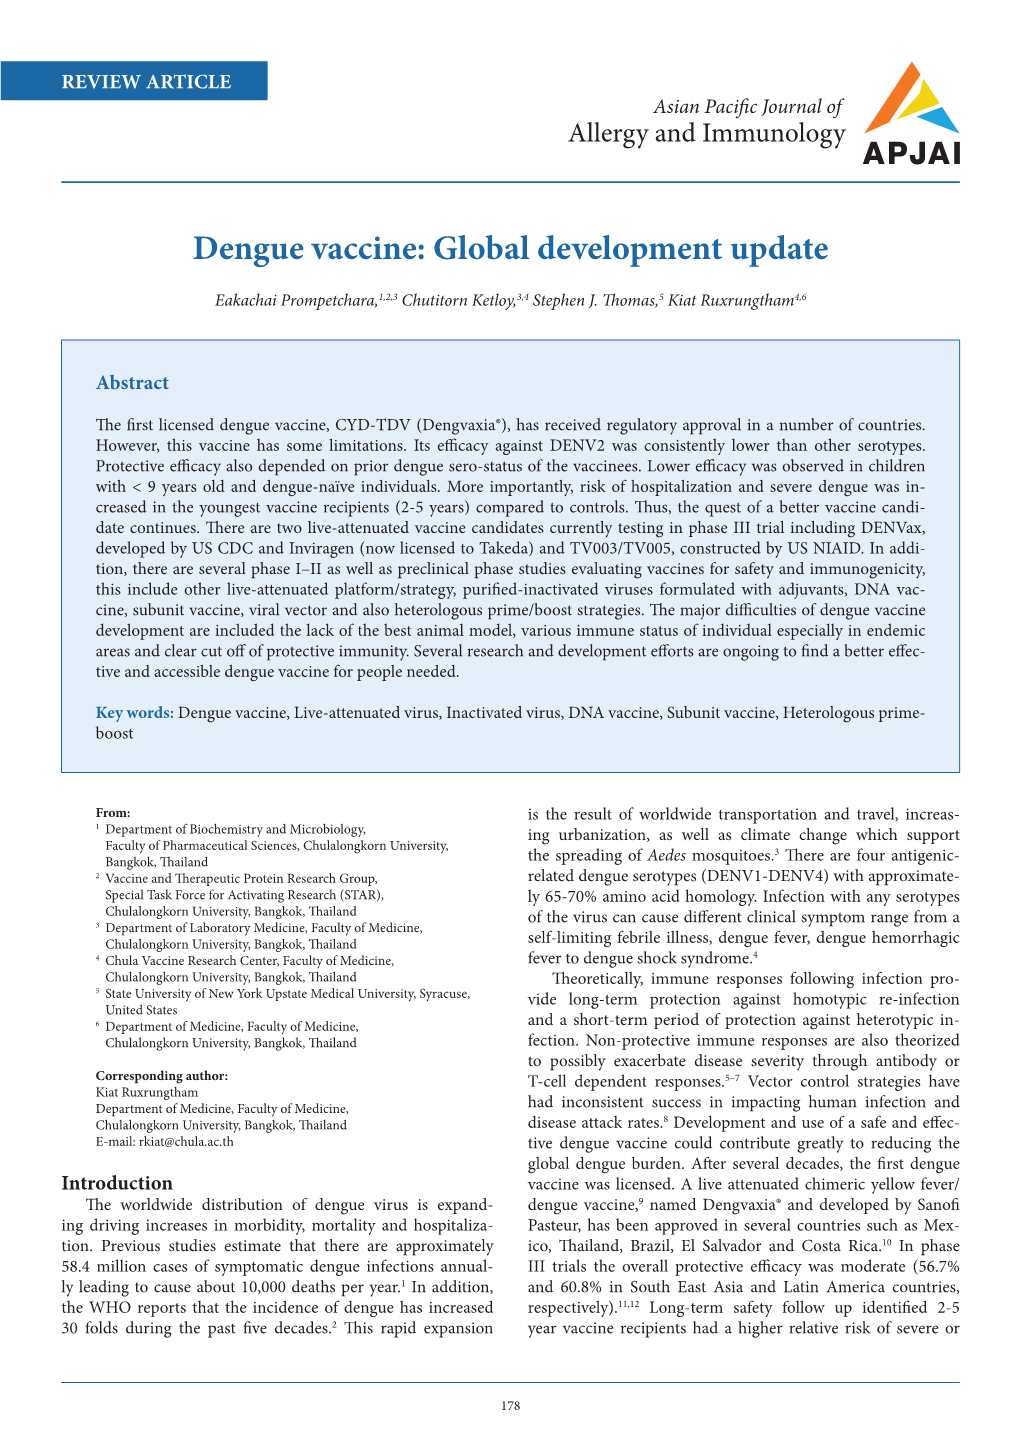 Dengue Vaccine: Global Development Update